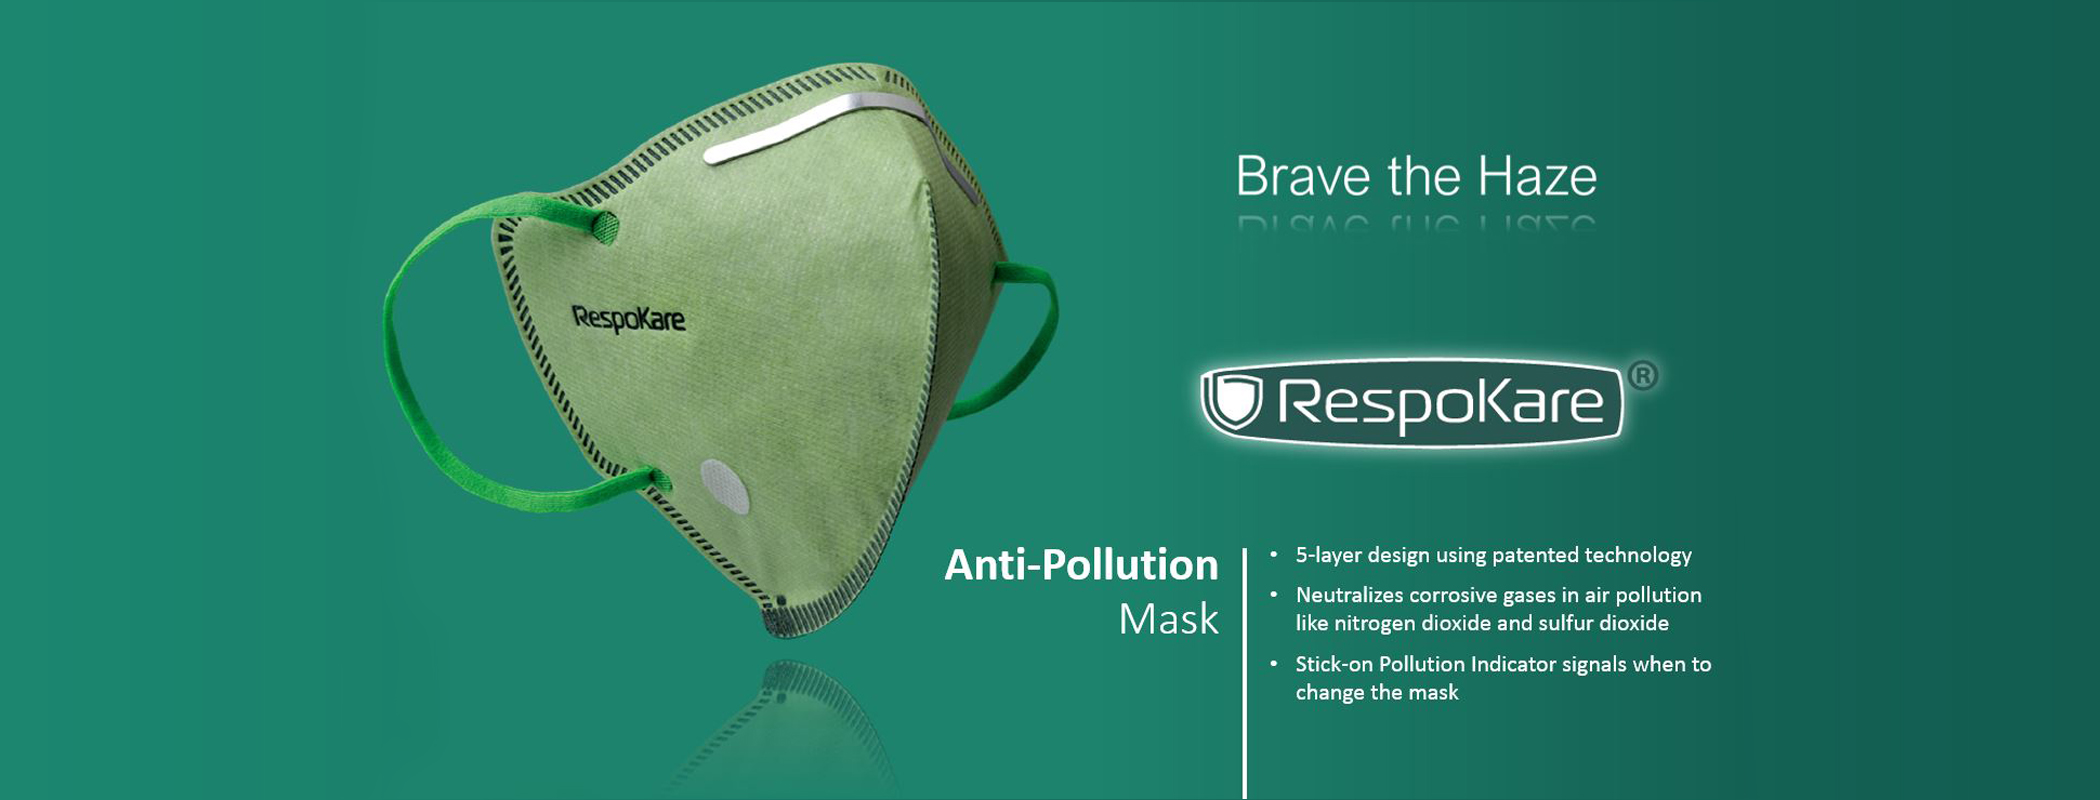 Respokare Anti-Pollution Mask